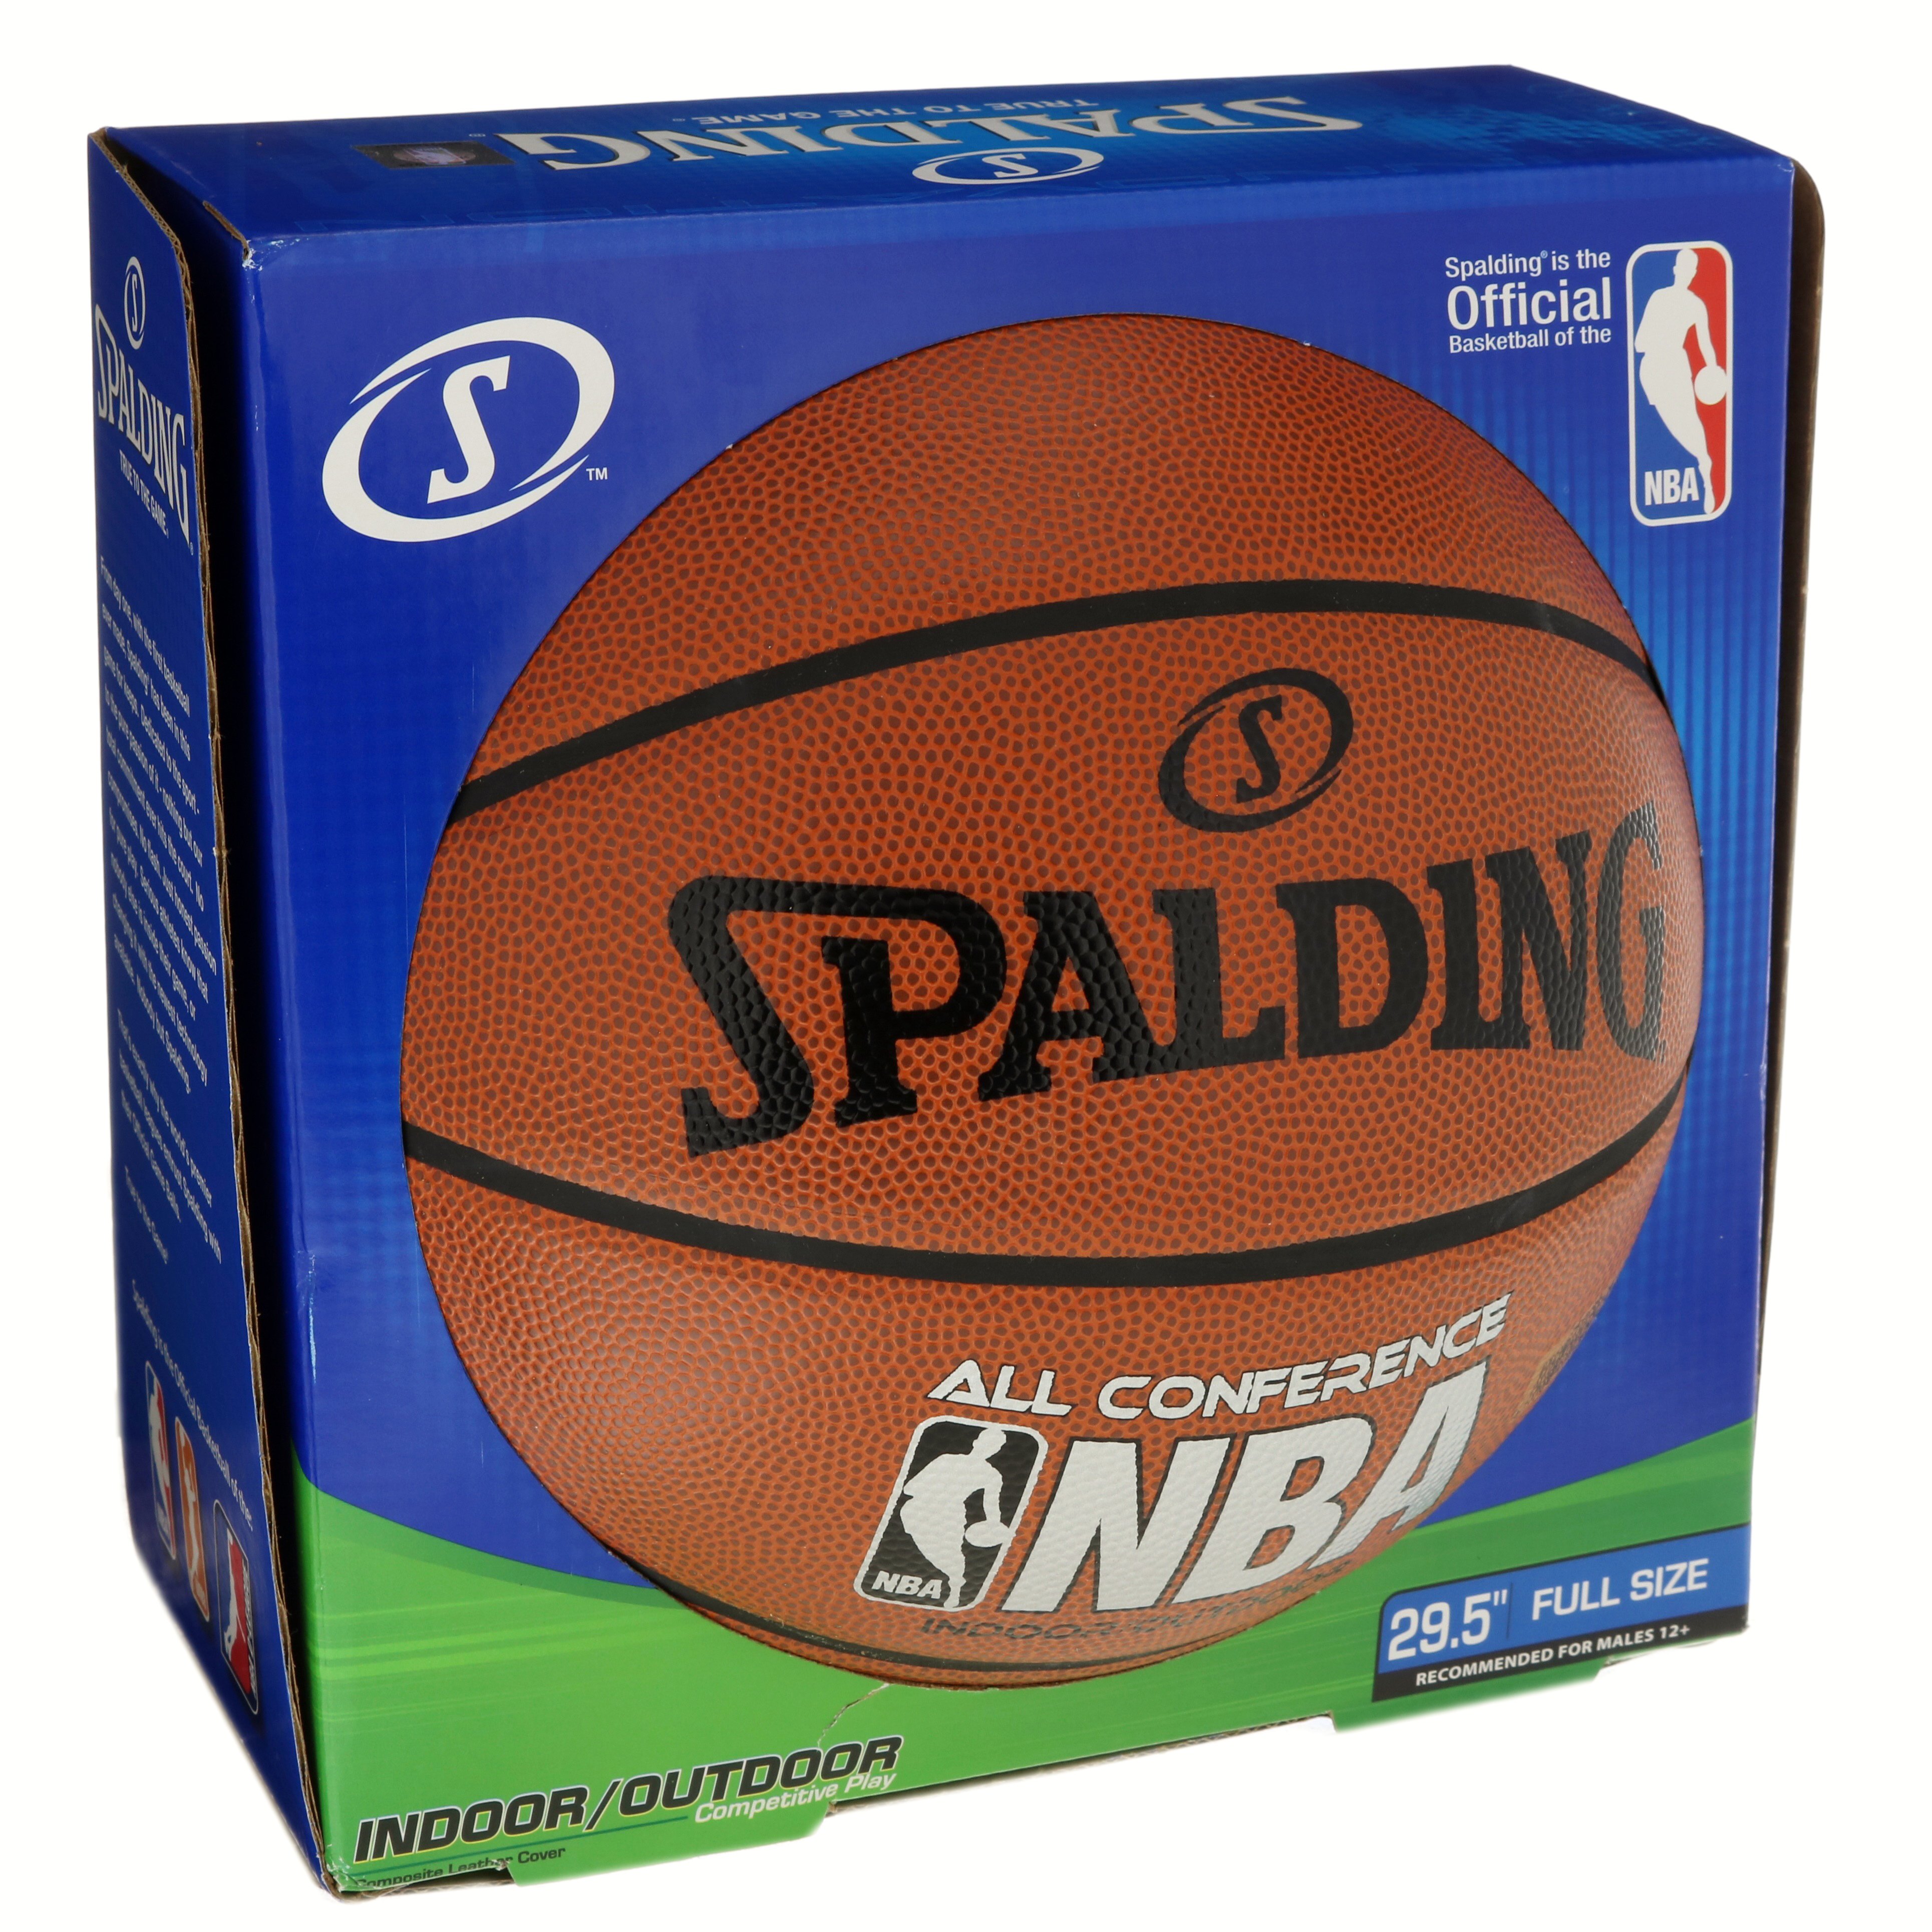 Spalding NBA All Conference Basketball - Shop Balls at H-E-B